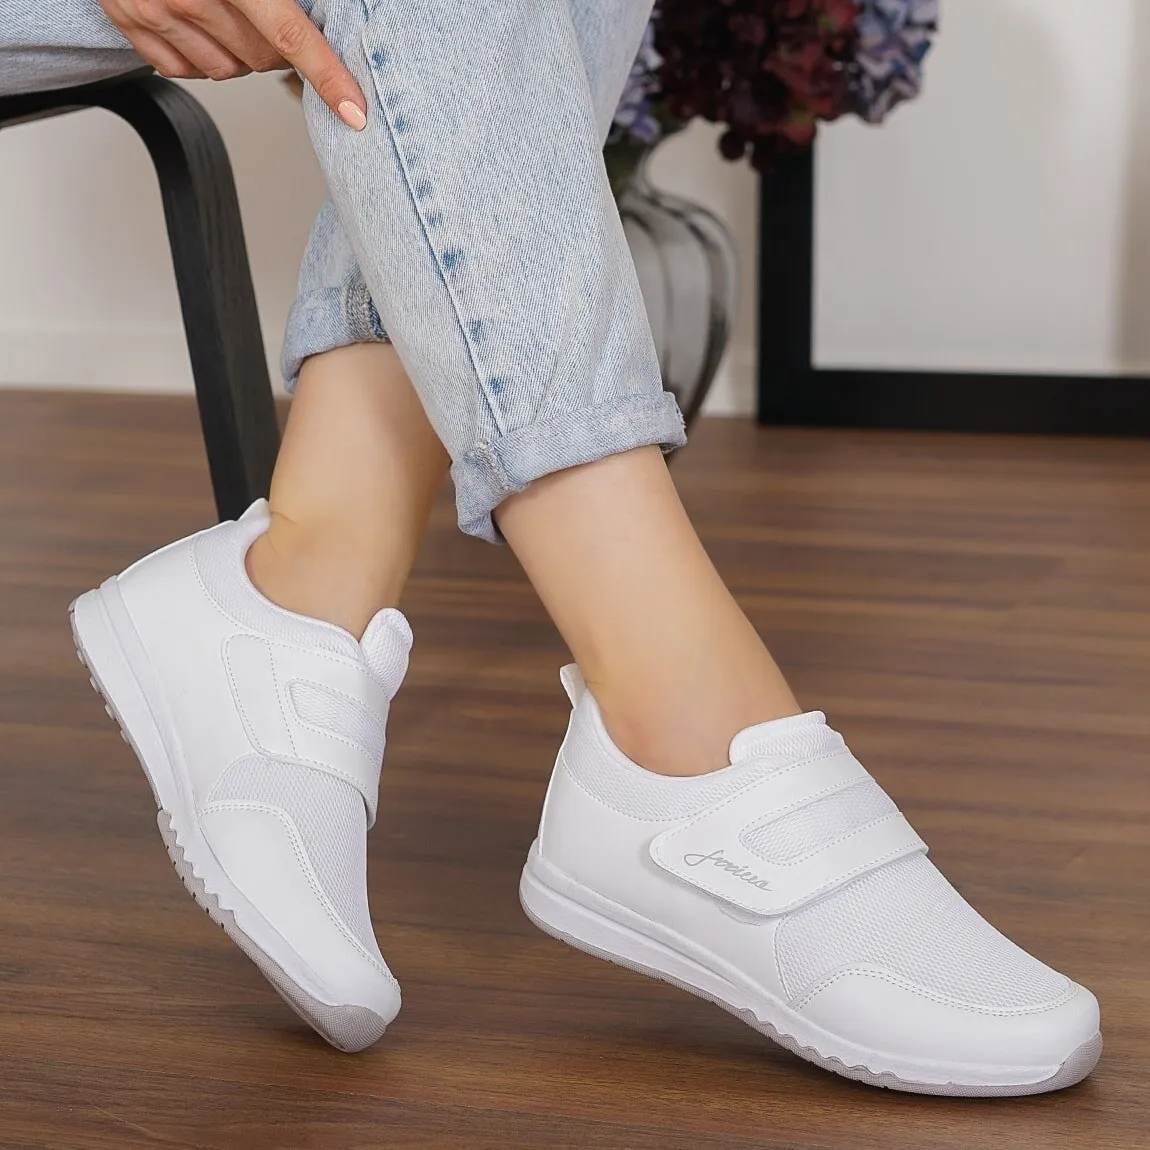 Bestseller Damenschuhe Casual Walking Style Schuhe Saisonale Klett verschlüsse Atmungsaktive Truthahn Sportschuhe für Damen